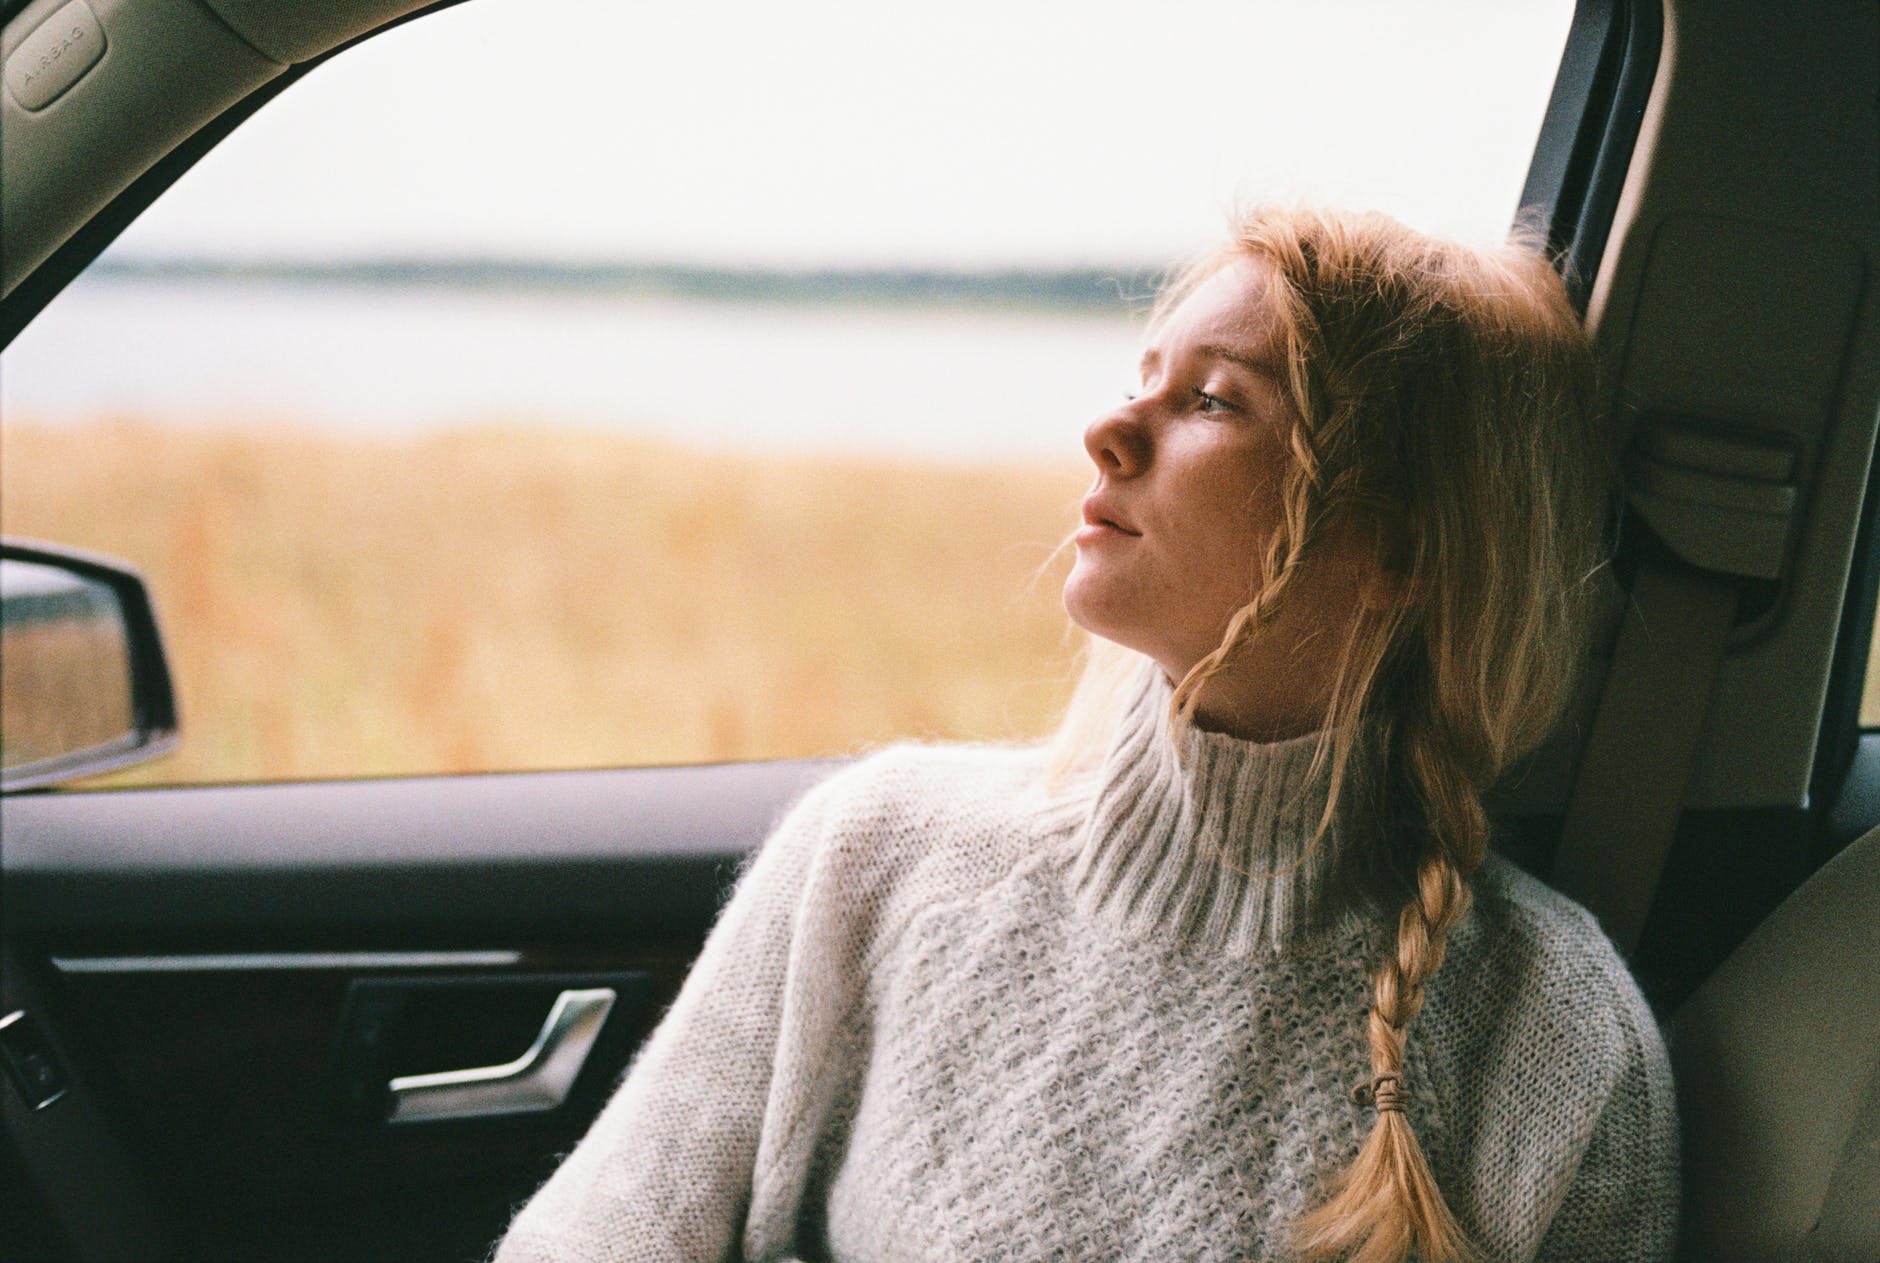 woman in sweater sitting inside a car